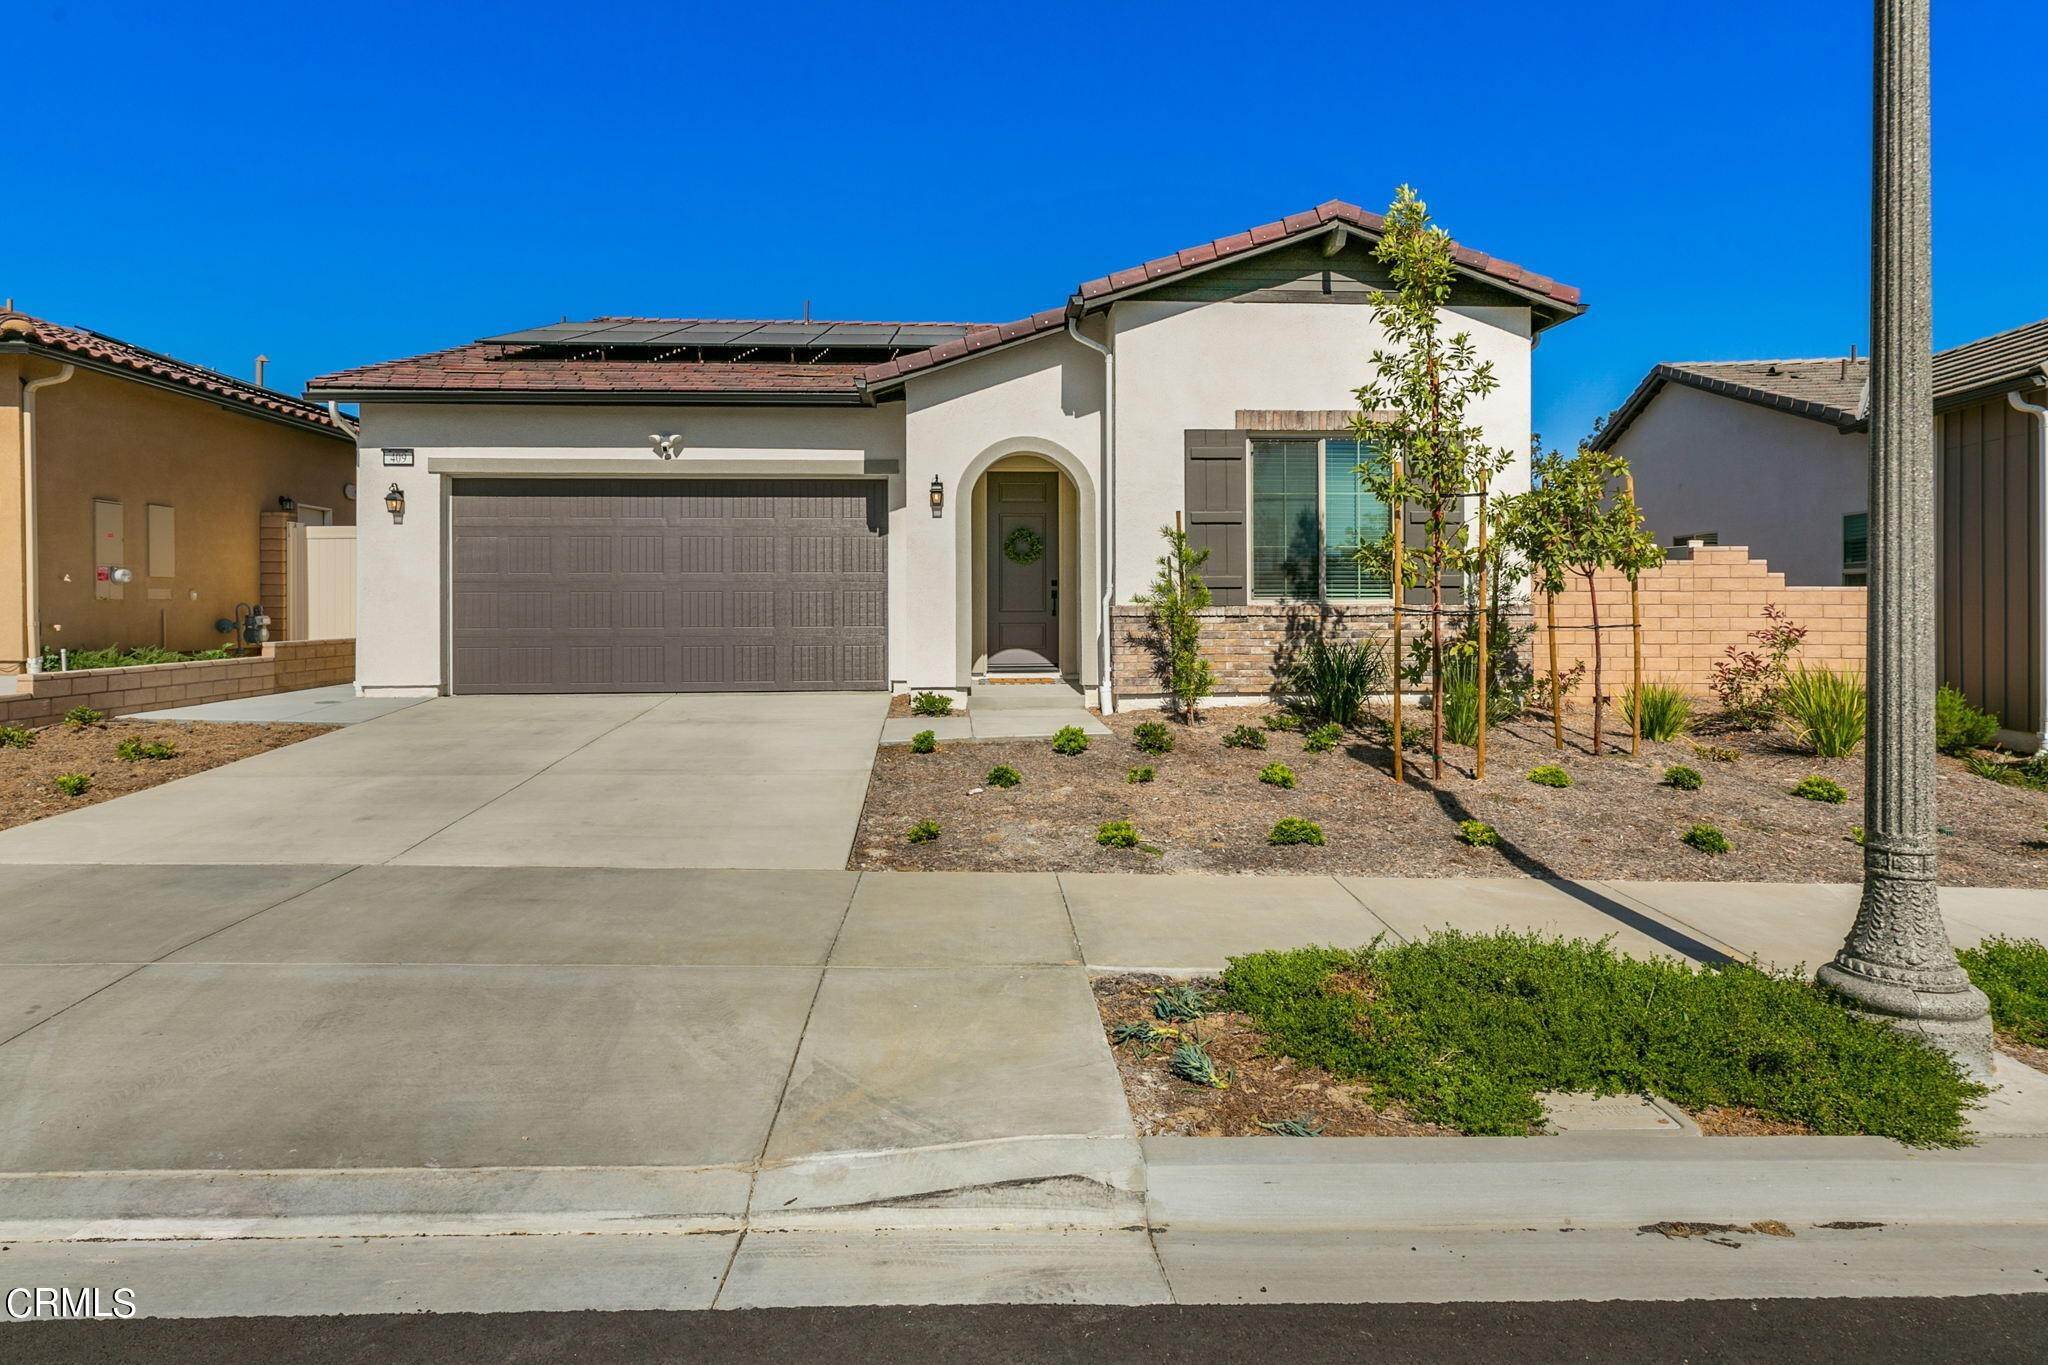 42. Single Family Homes for Sale at 409 Eureka Drive Santa Paula, California 93060 United States